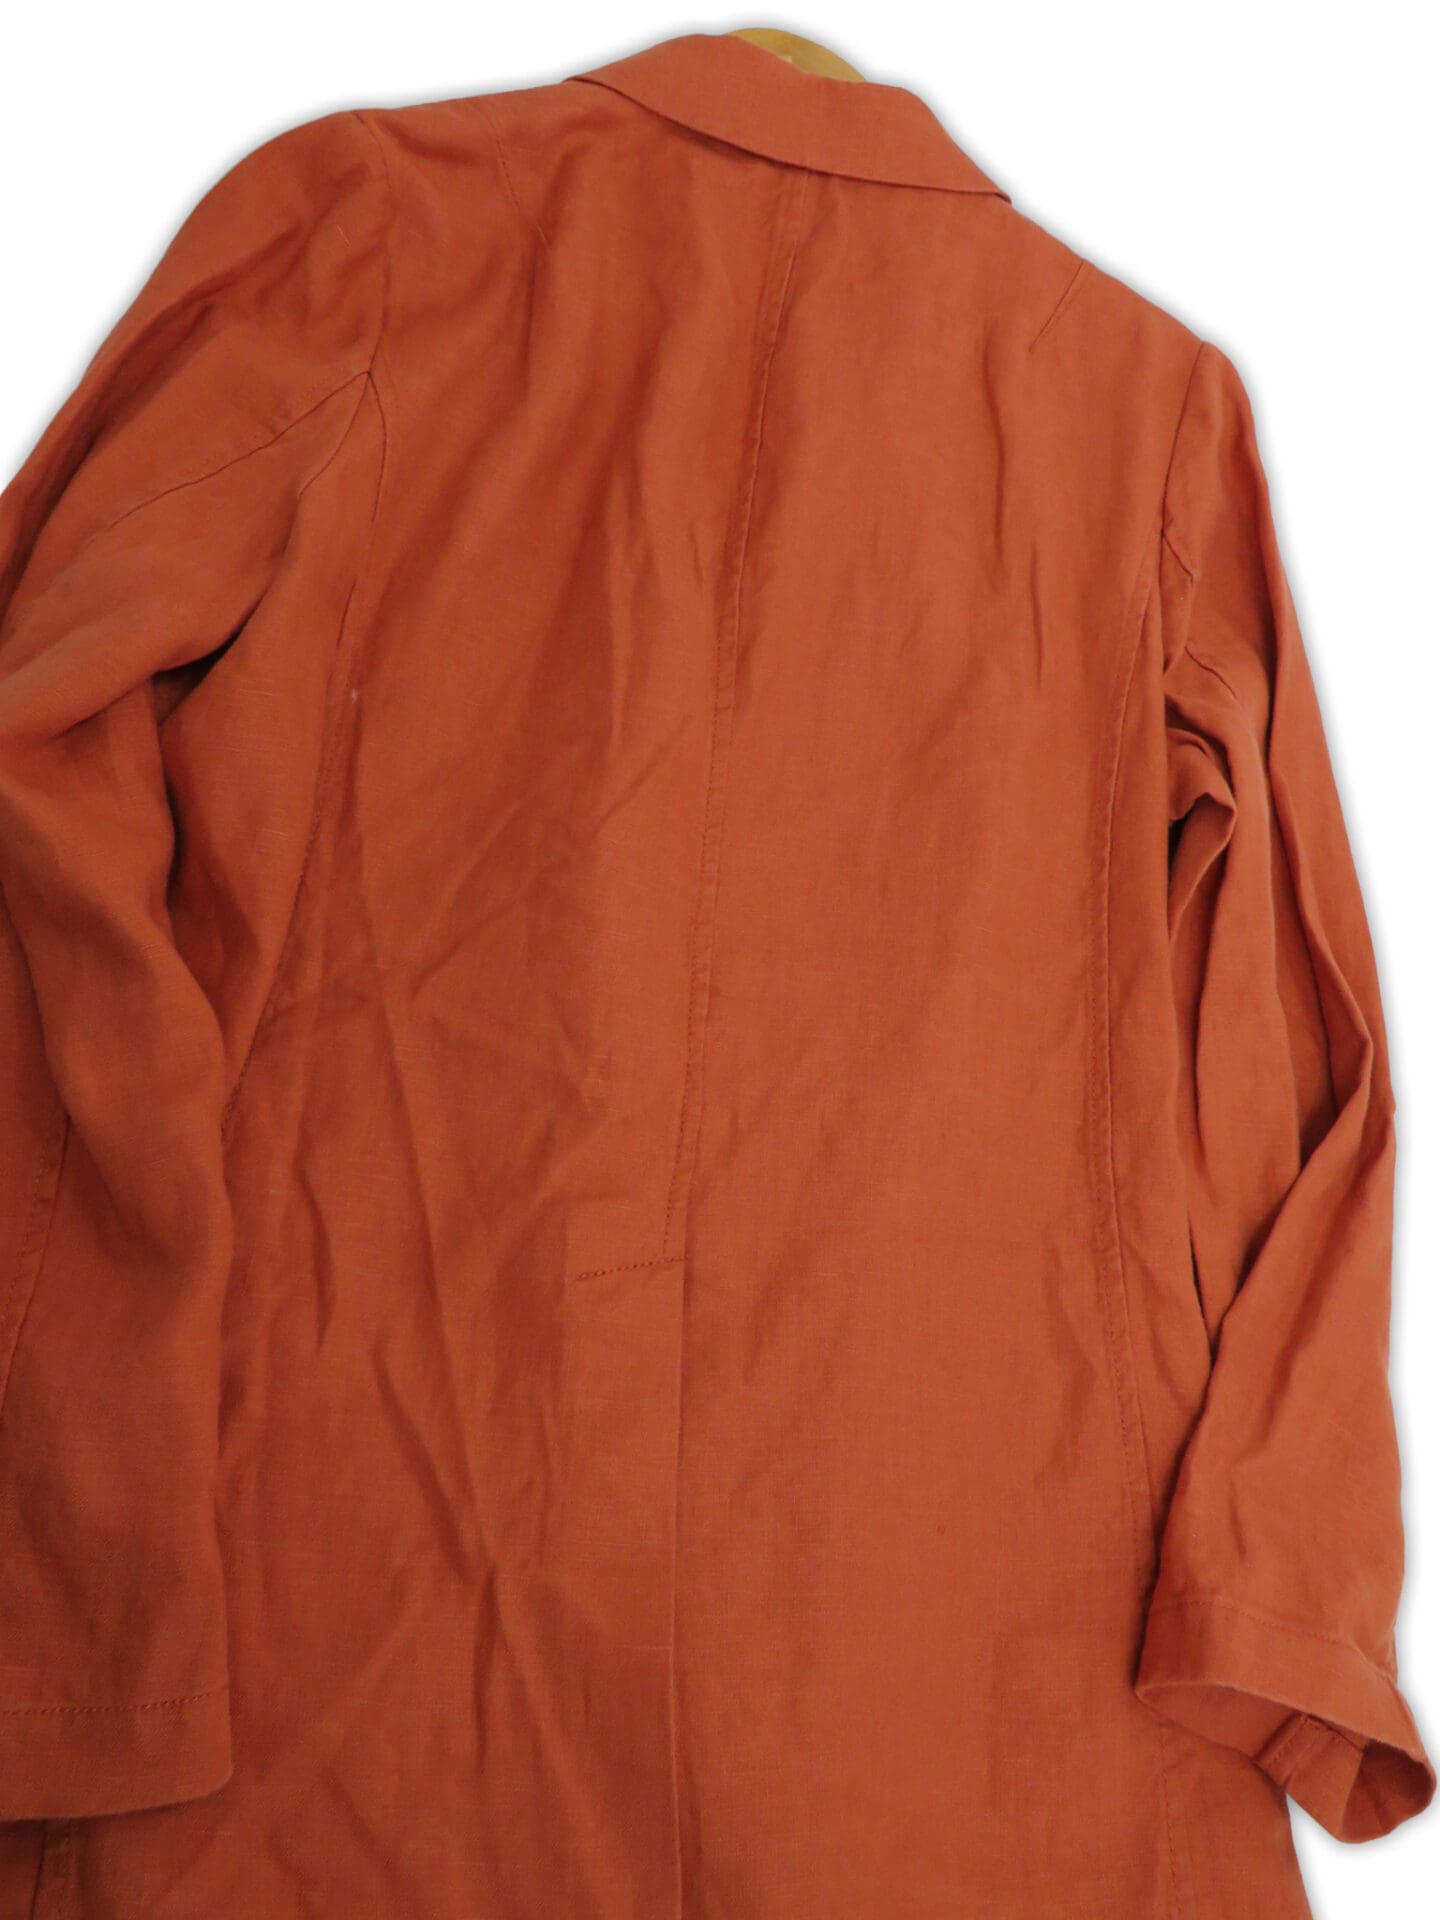 Orange linen women's loose fitting blazer